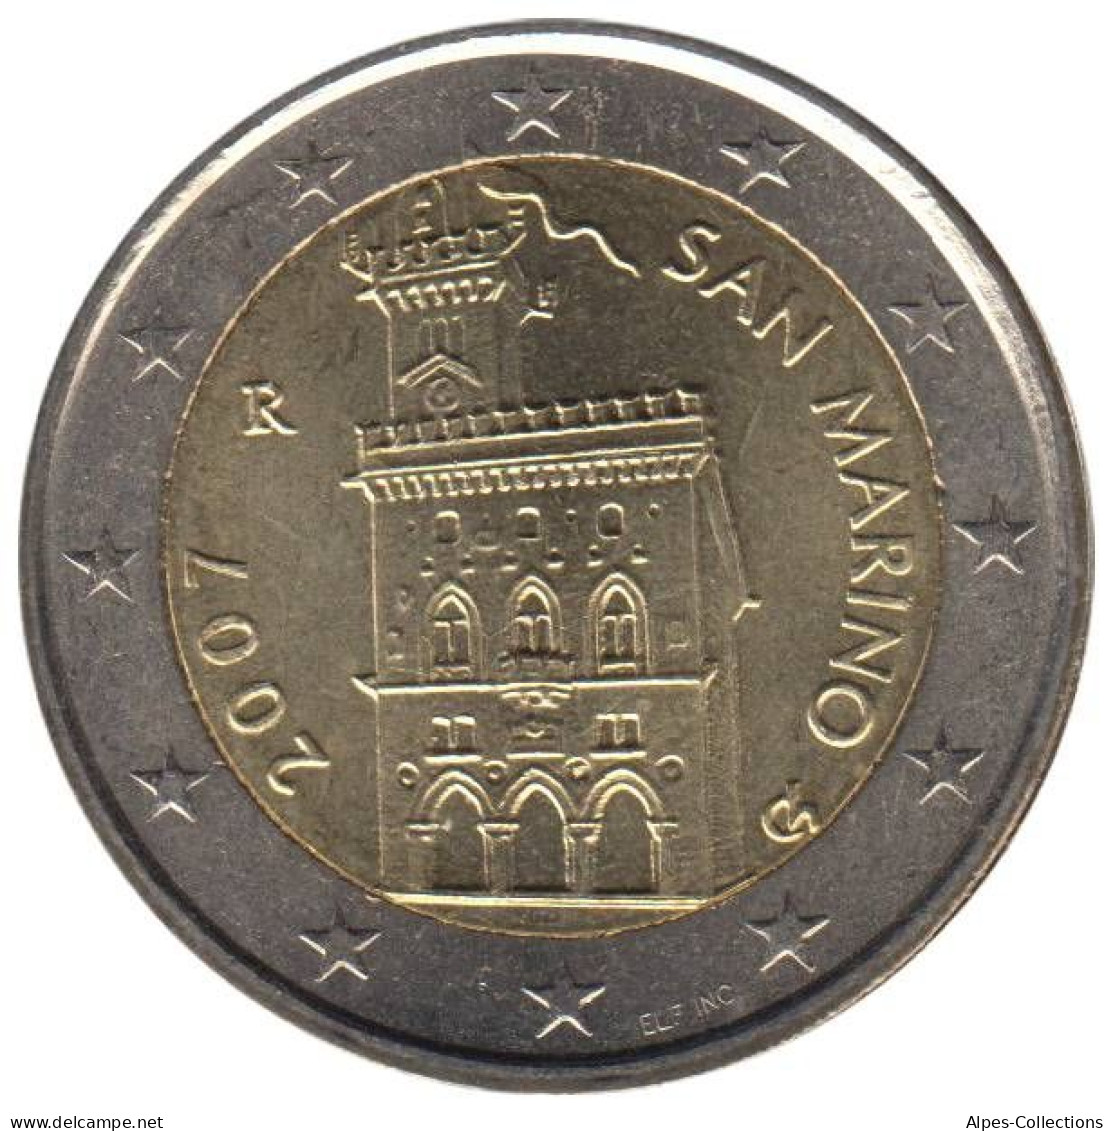 SA20007.2 - SAINT MARIN - 2 Euros - 2007 - San Marino